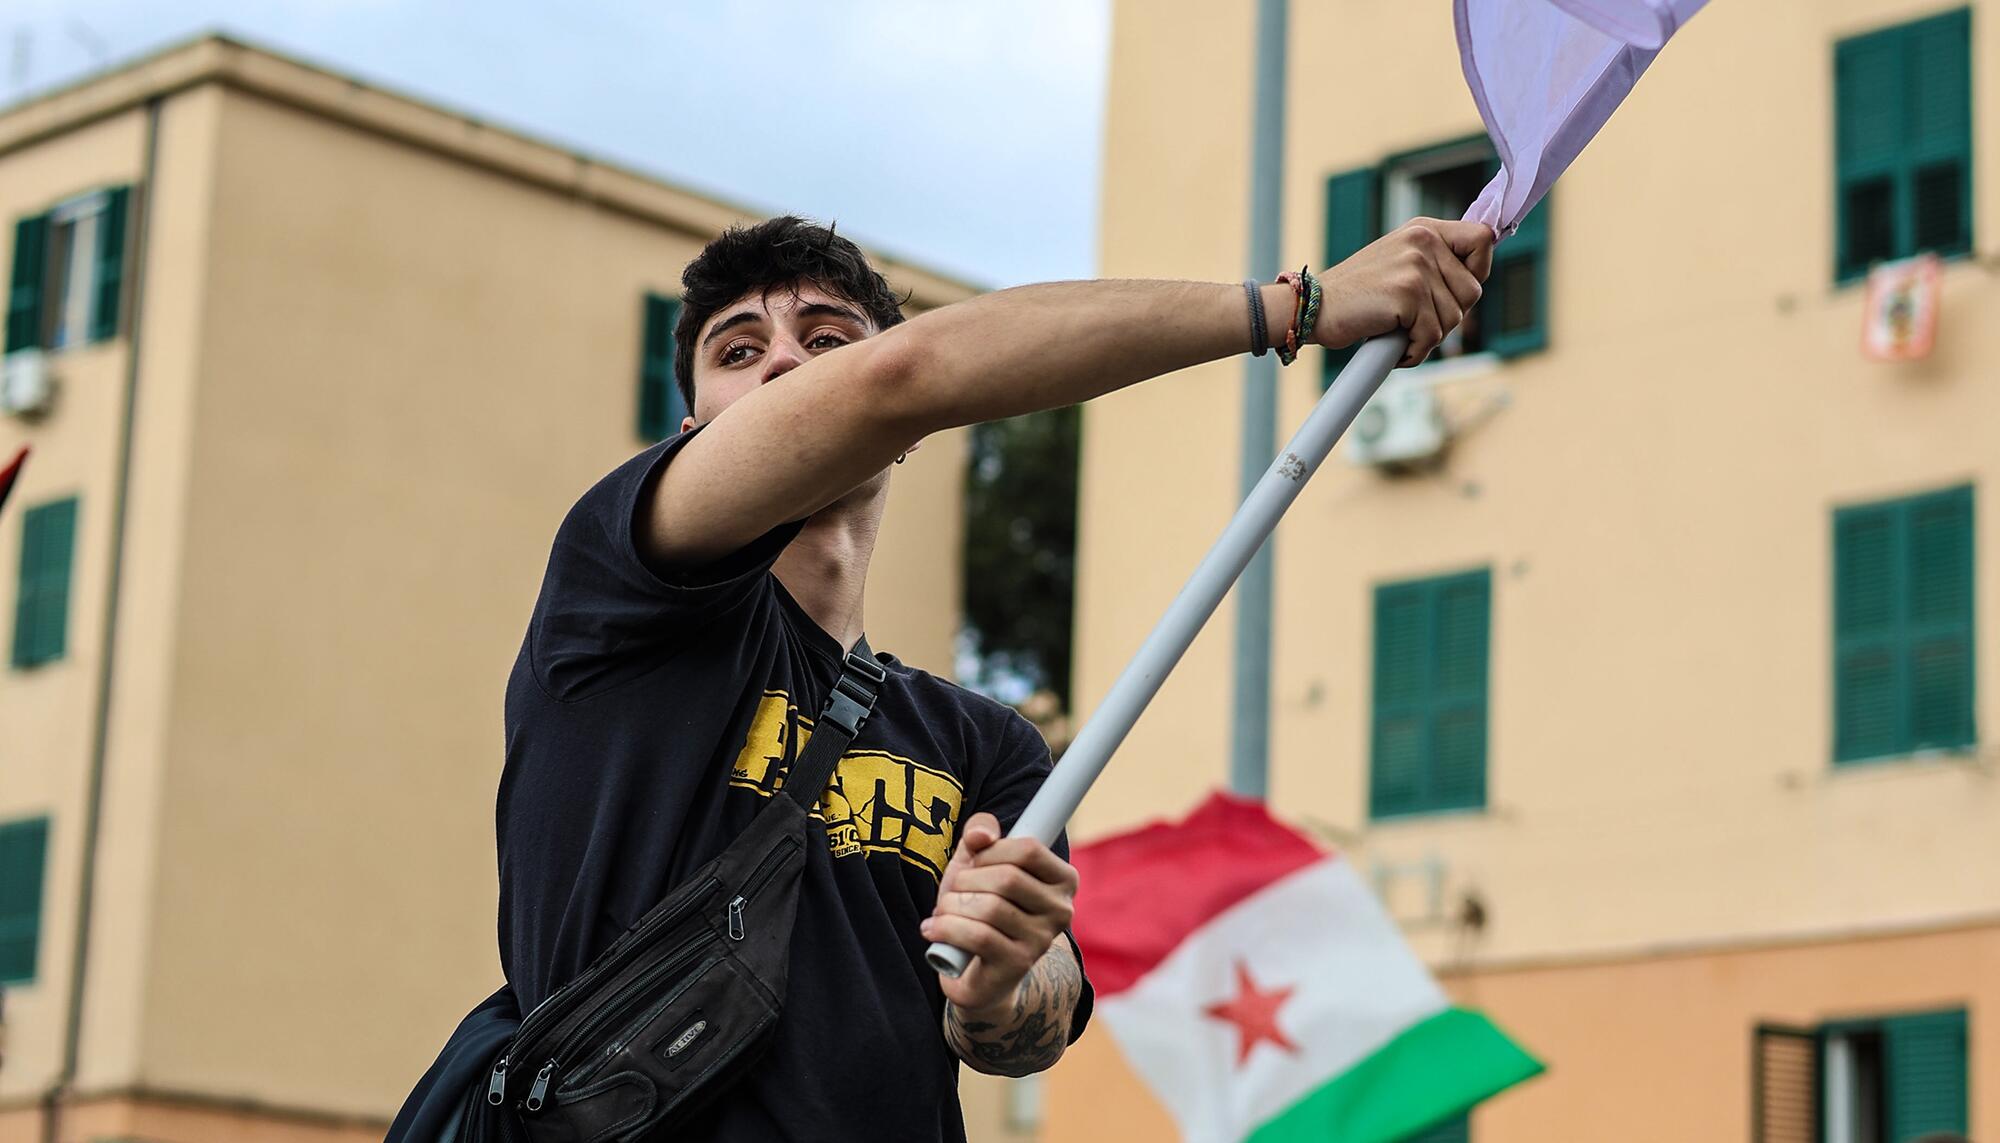 Manifestación antifascista en Roma - 19